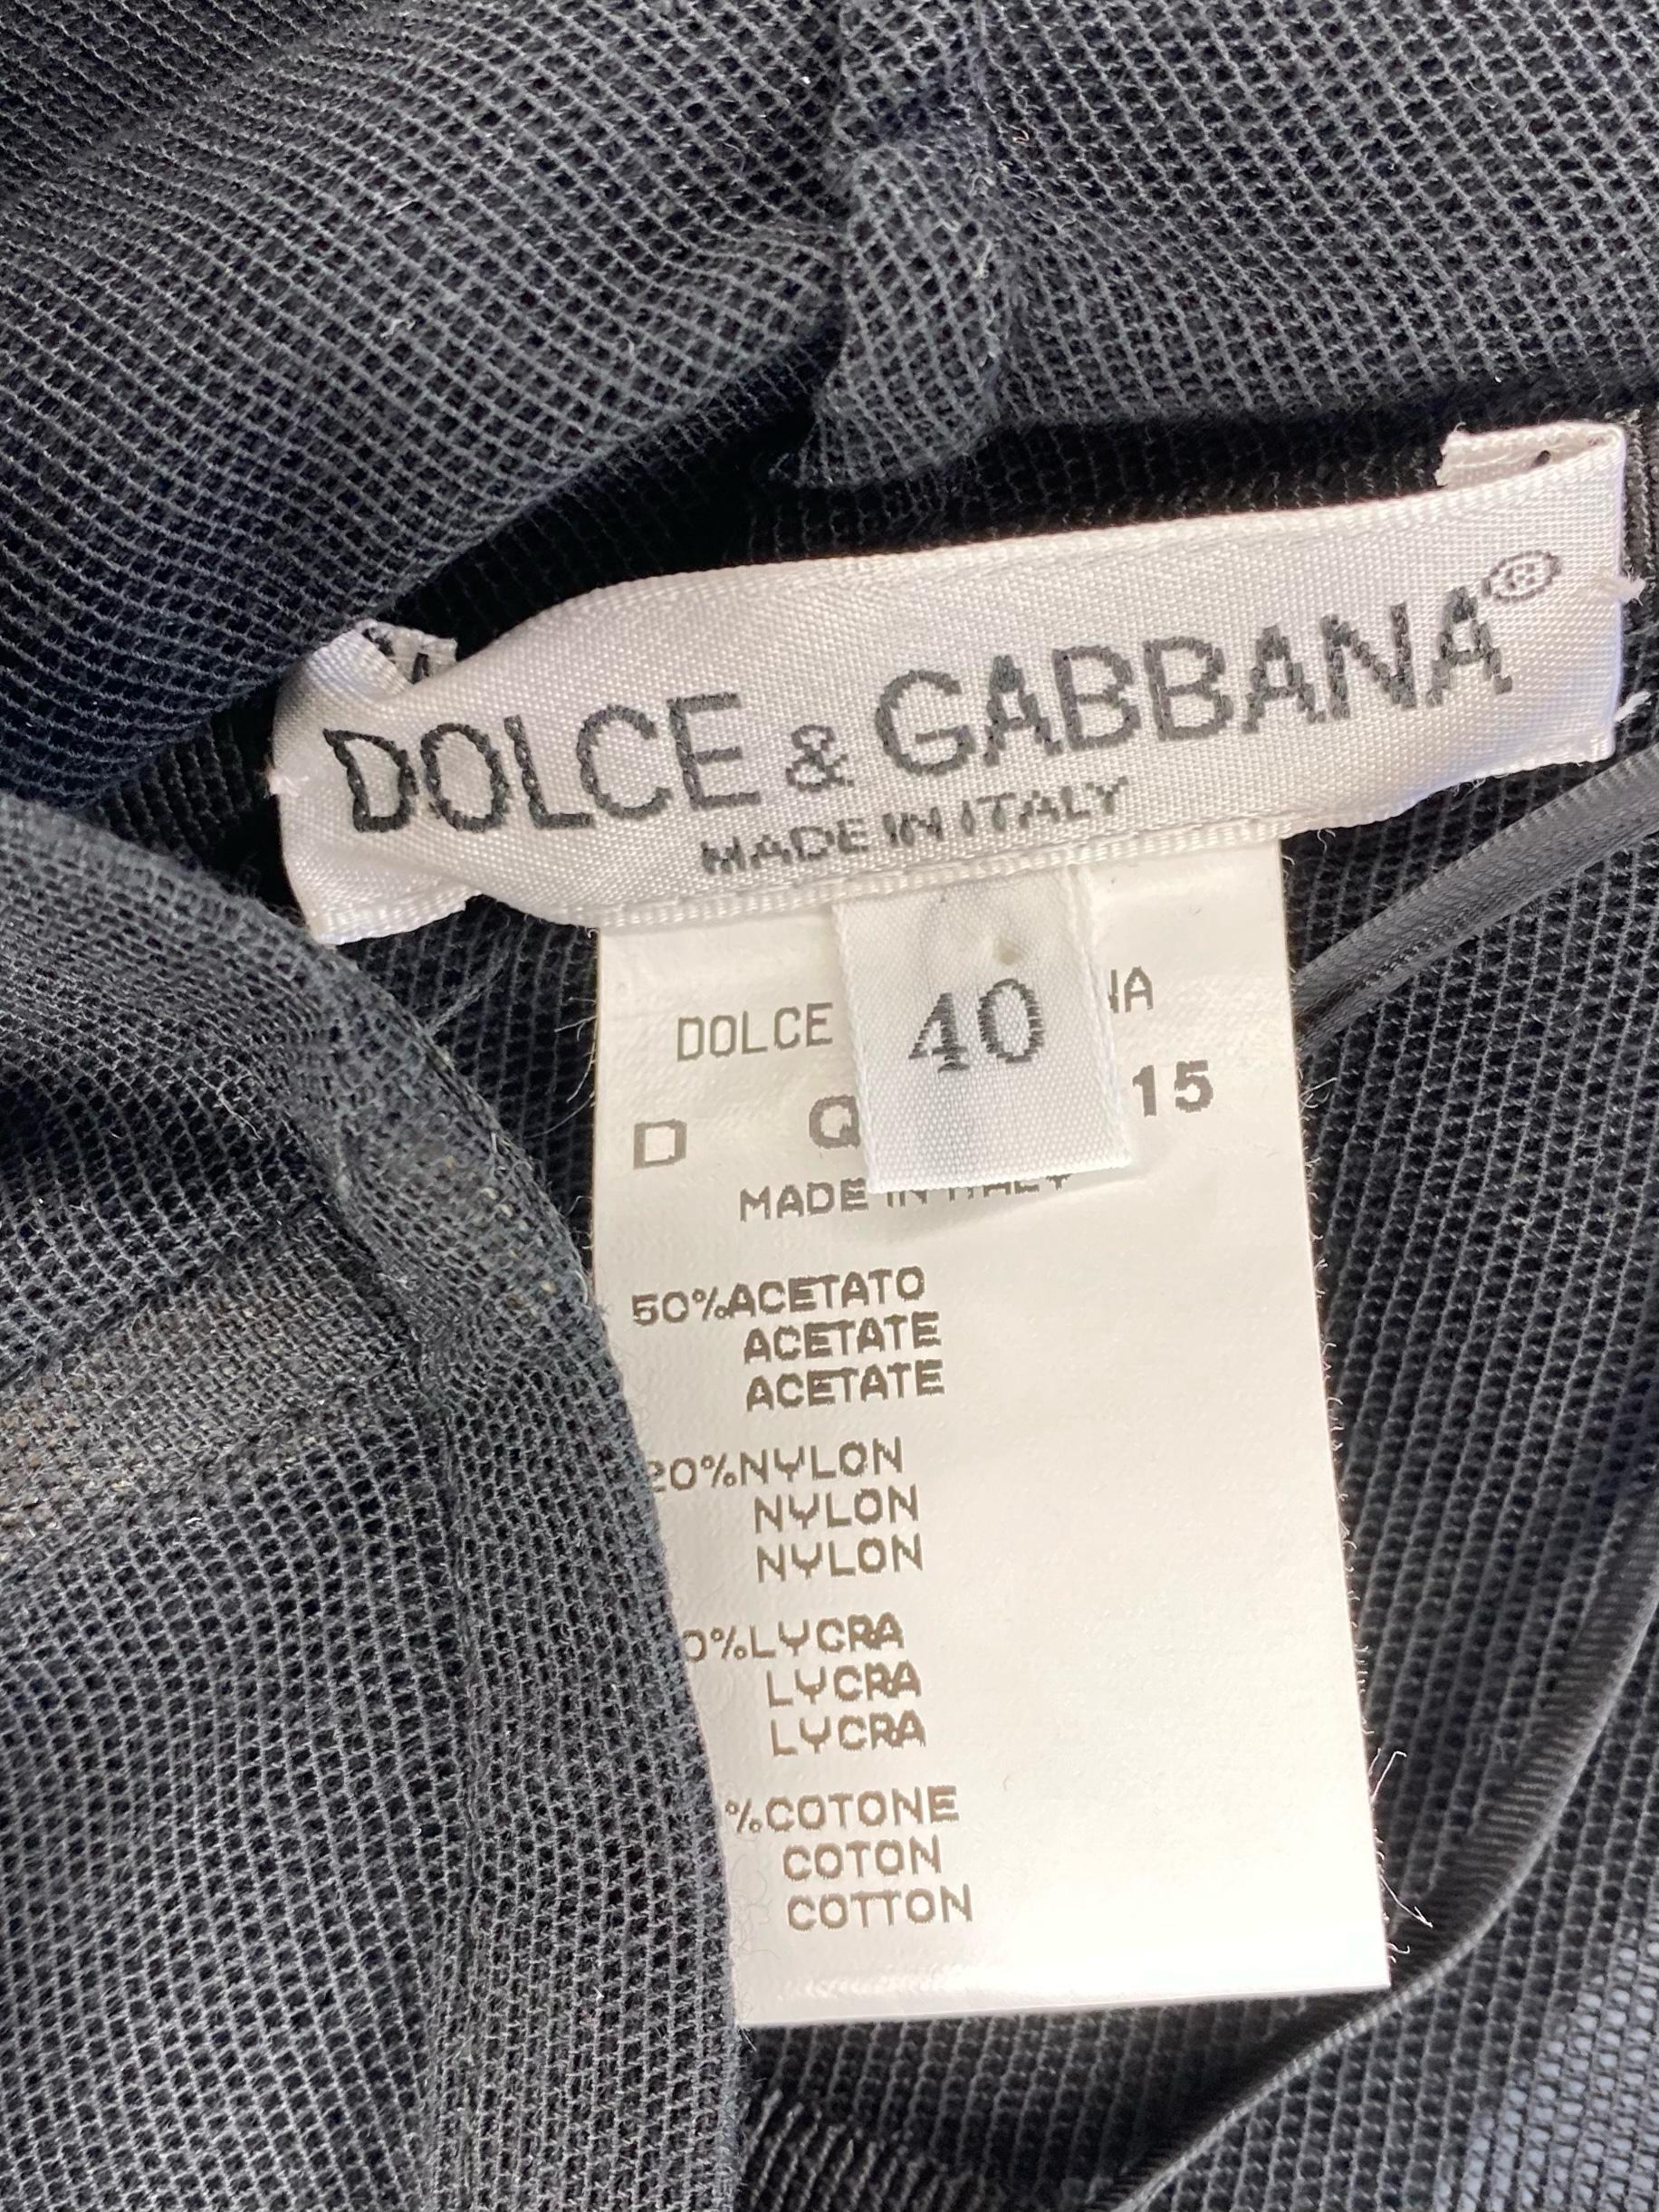 S/S 1998 Dolce & Gabbana Butterfly Corset Black Mini Dress Stromboli Collection 1